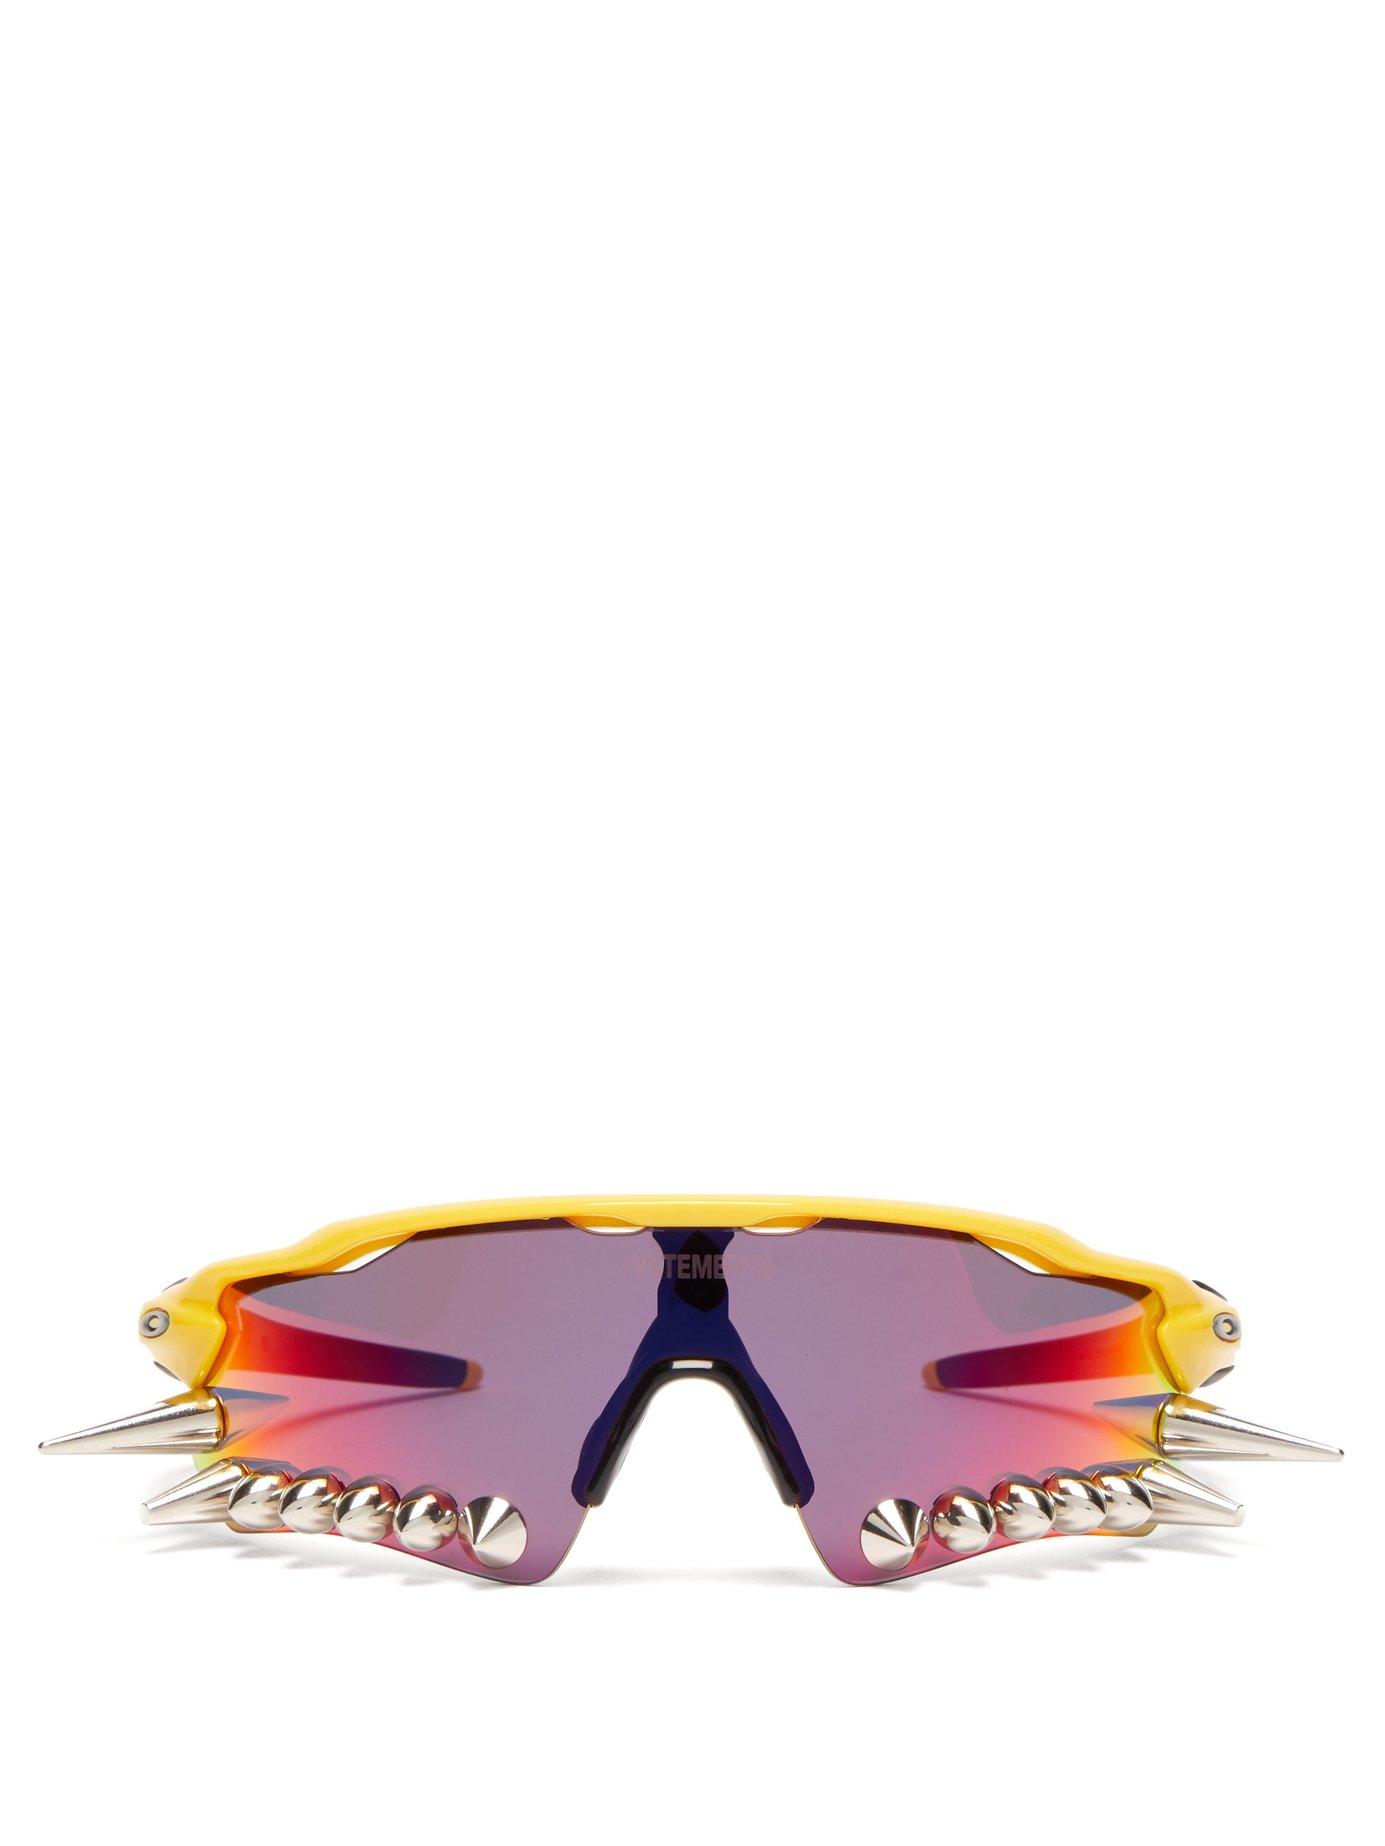 Vetements X Oakley Spikes 400 Sunglasses for Men | Lyst